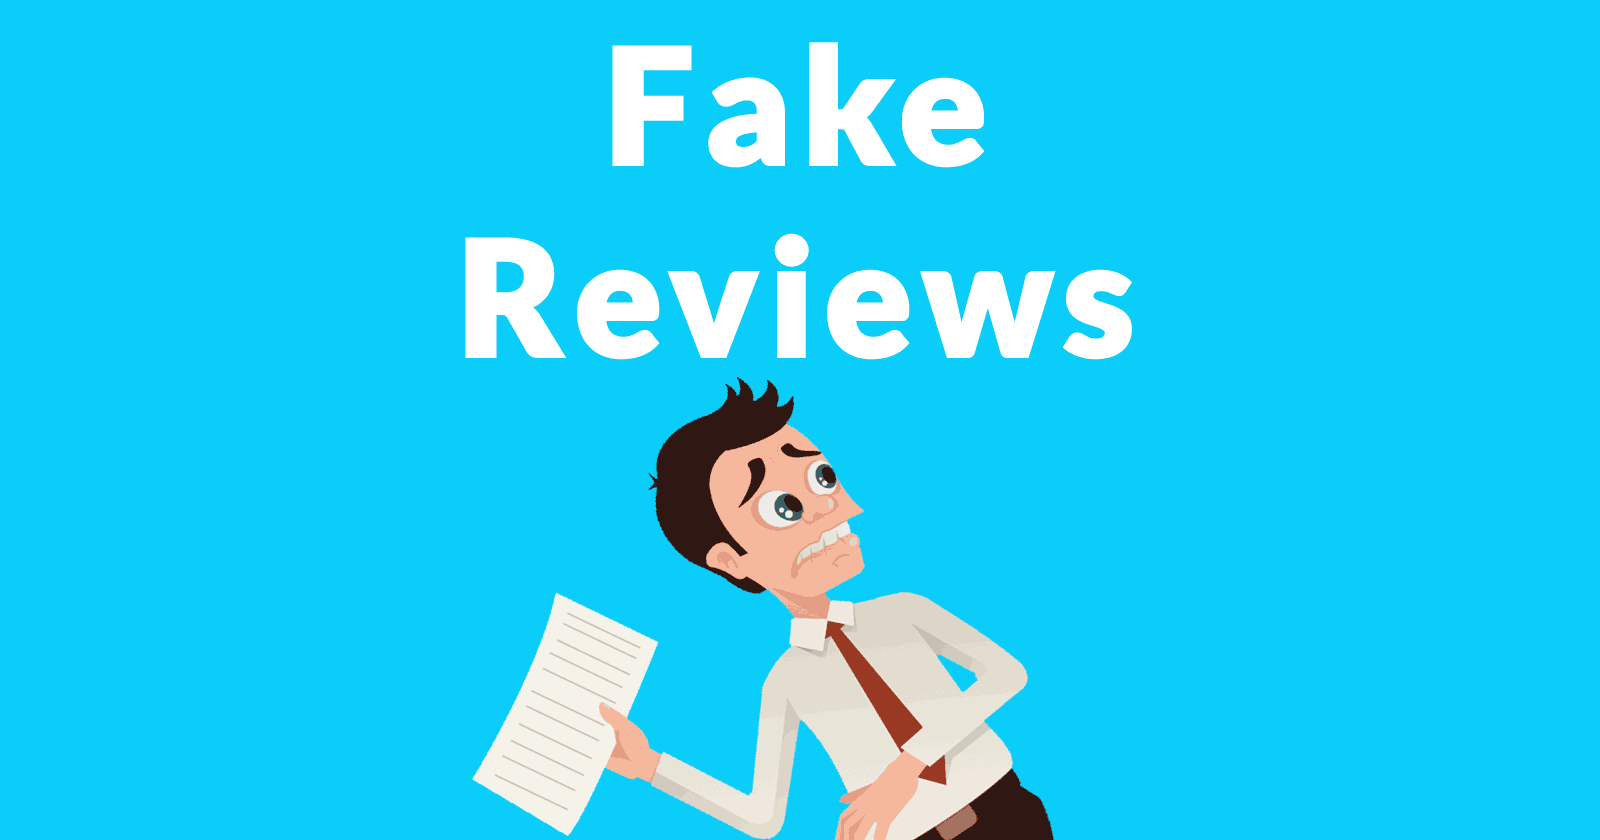 FTC Fake Review Violations